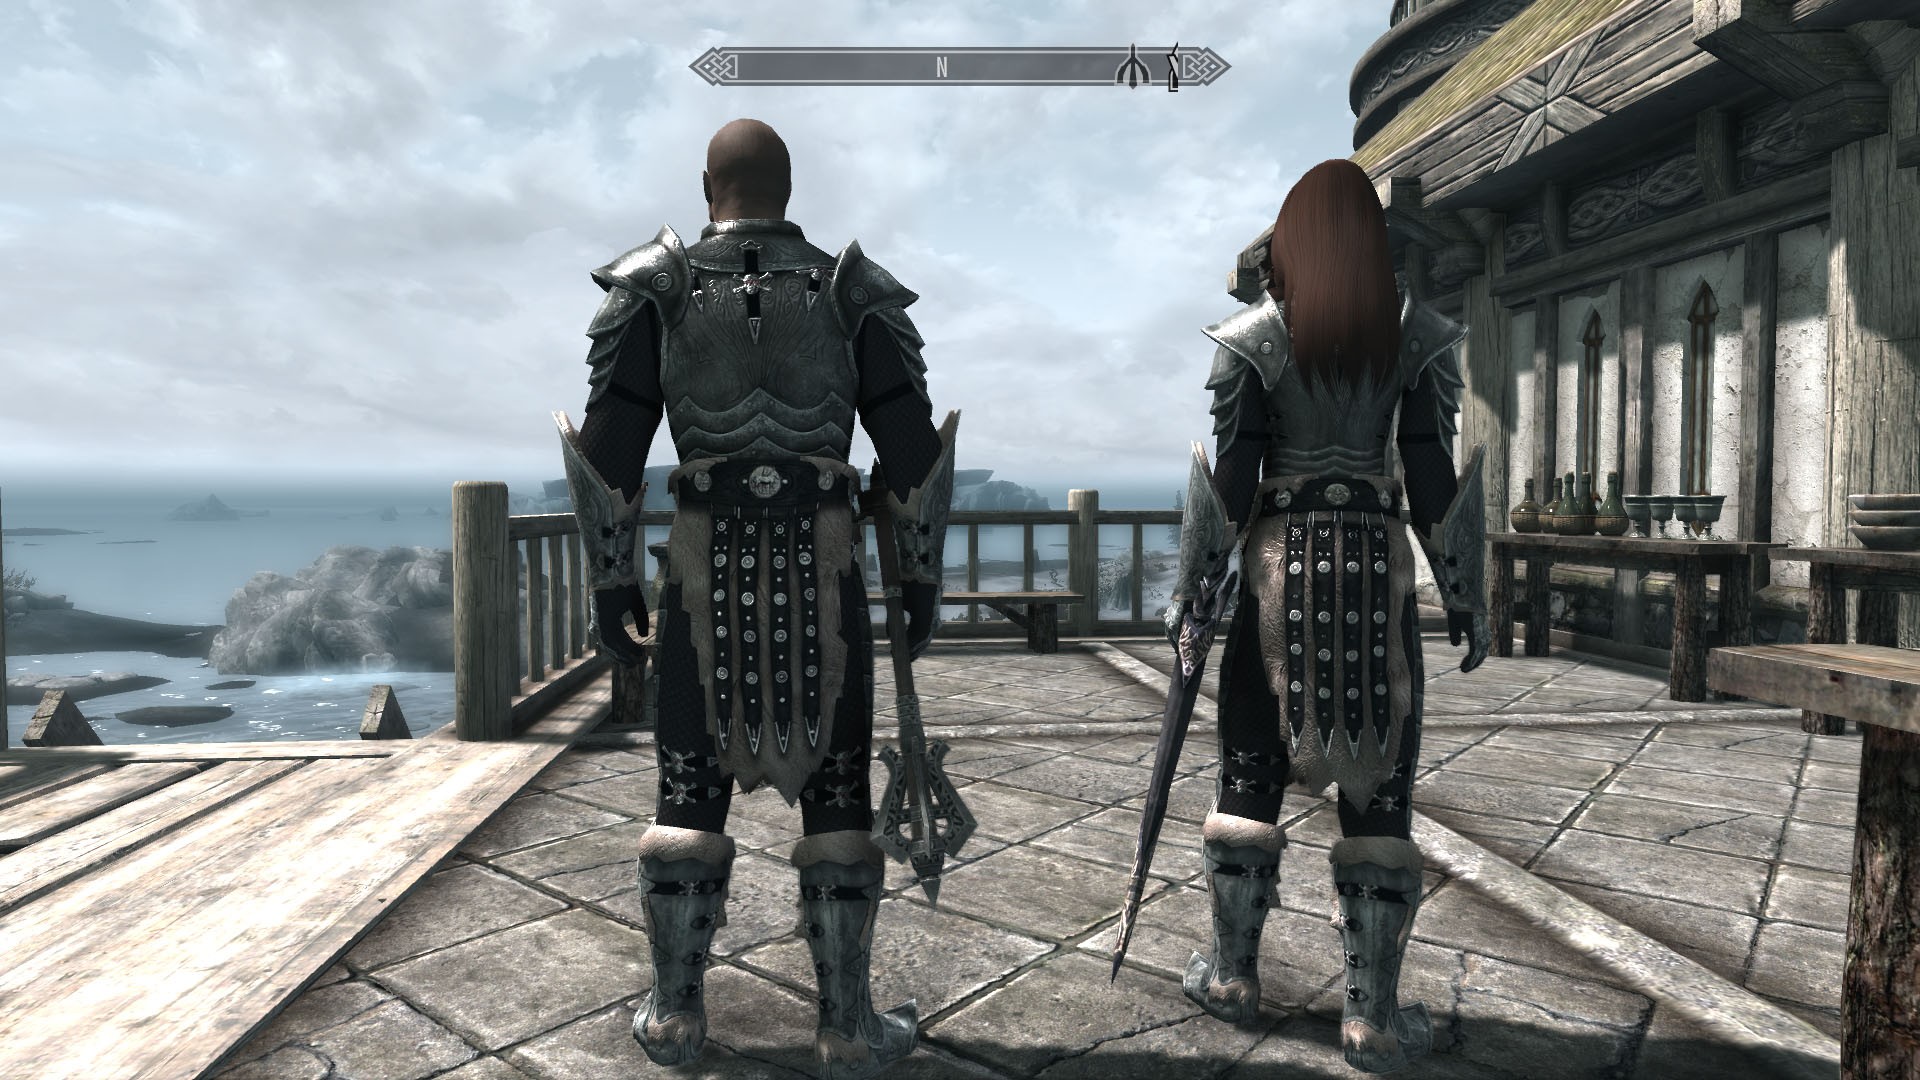 Skyrim black armor mod